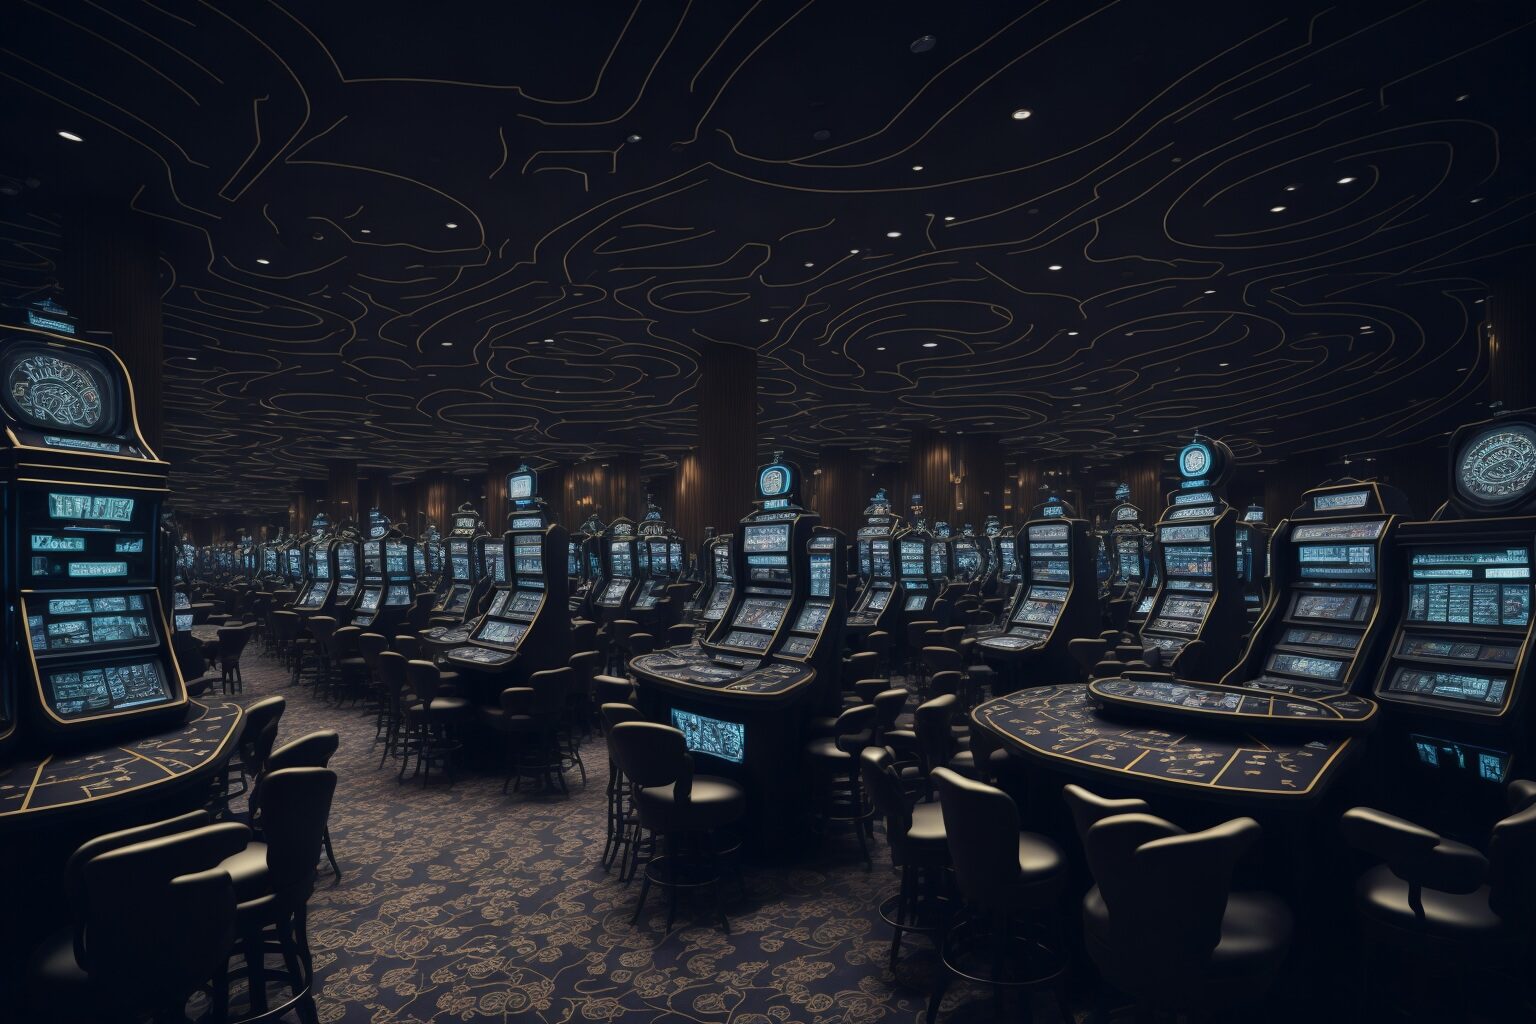 image to image 10 Leonardo Diffusion interior of a casino specifically focusing 1 (1)